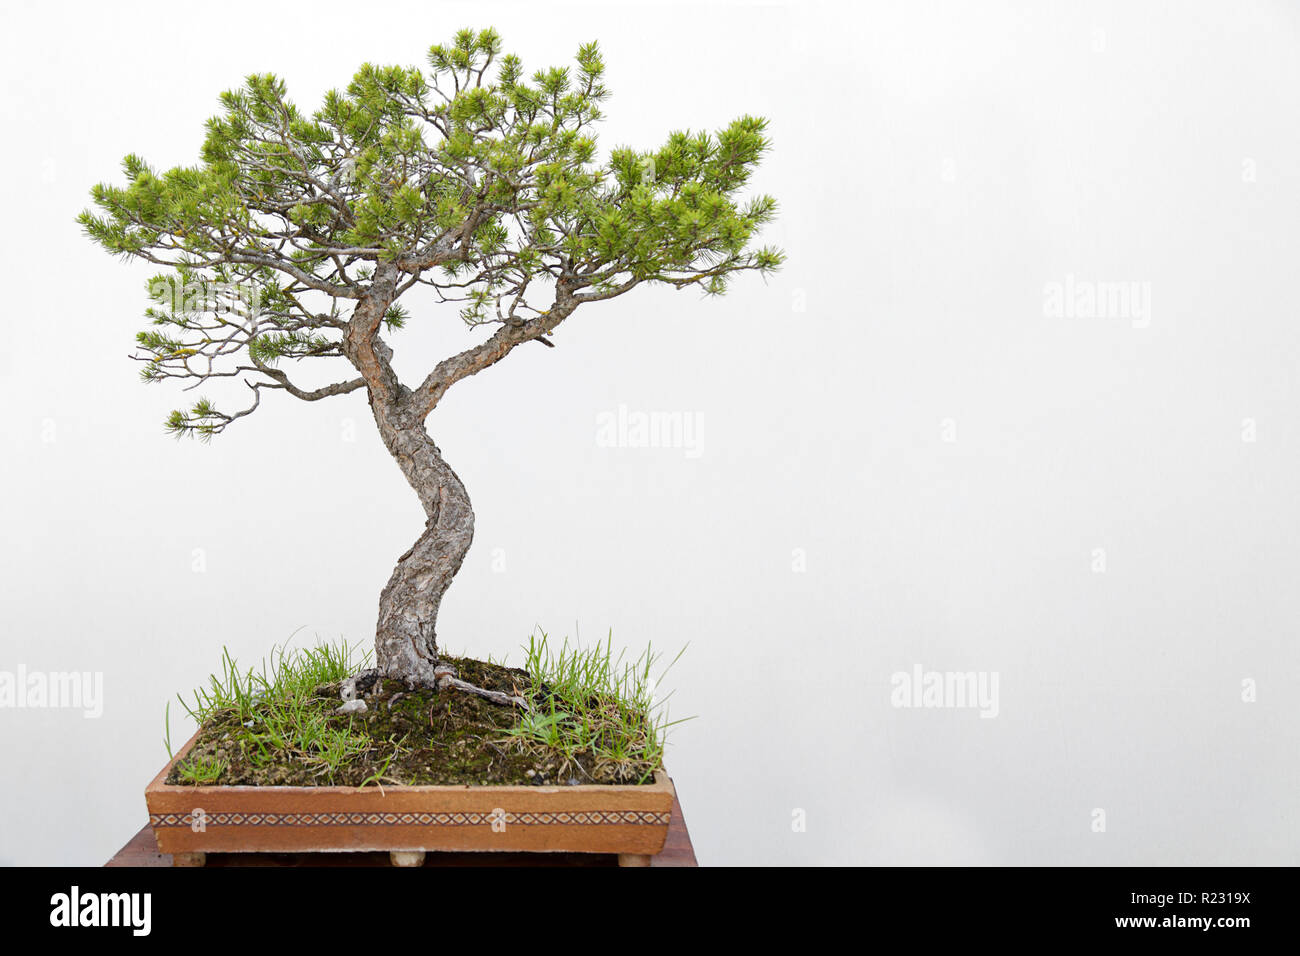 Scots pine (pinus sylvestris) bonsai on a wooden table and white background Stock Photo